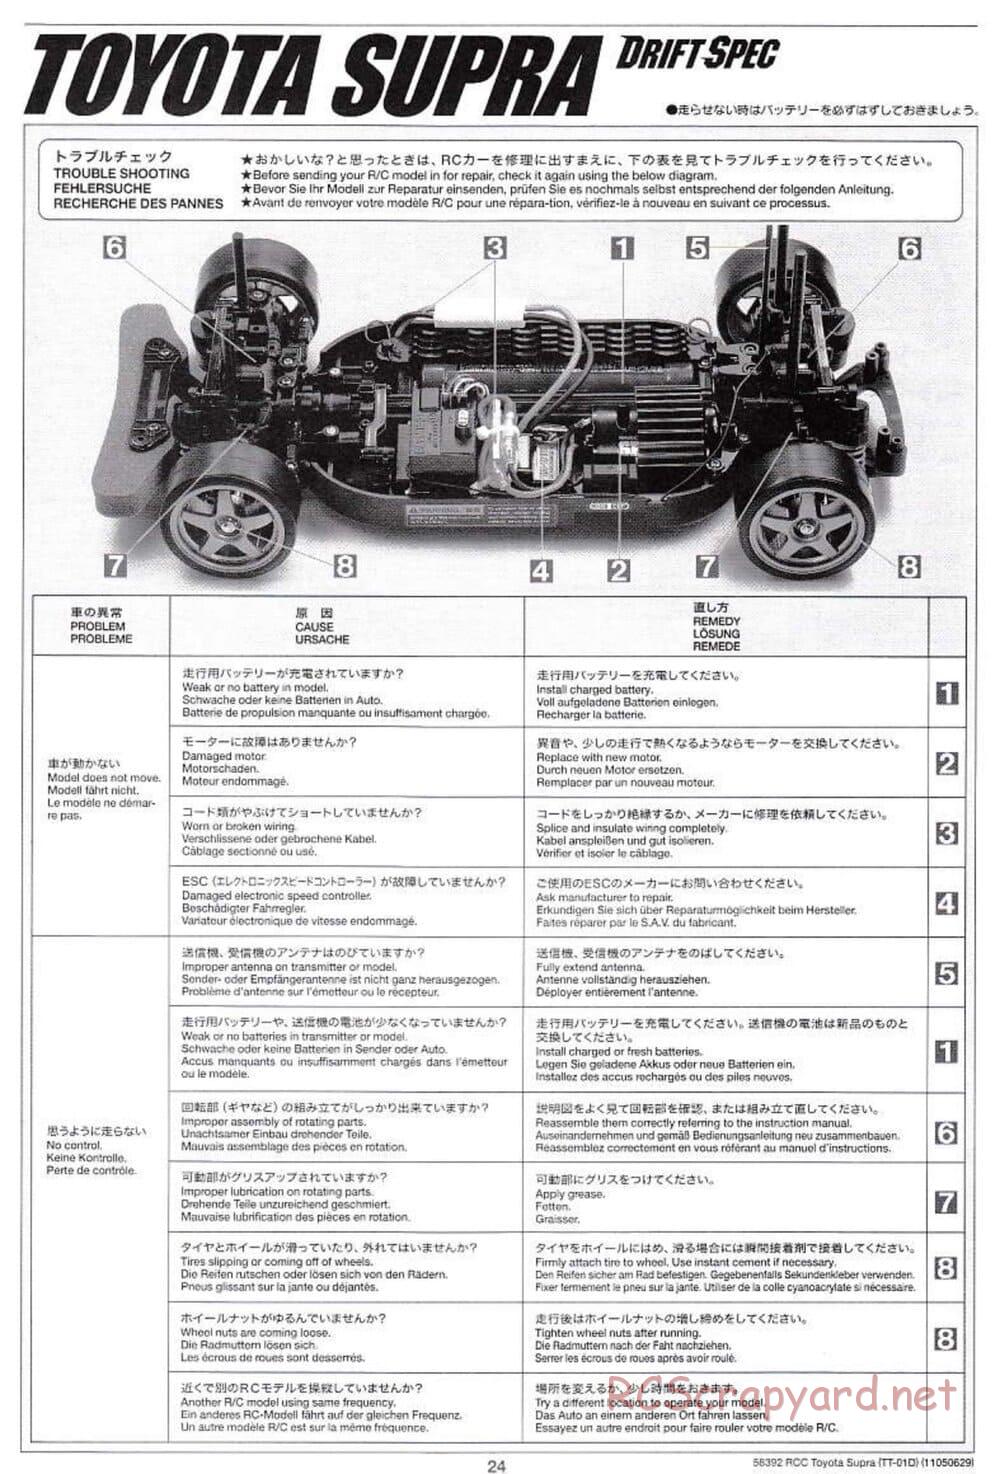 Tamiya - Toyota Supra - Drift Spec - TT-01D Chassis - Manual - Page 24